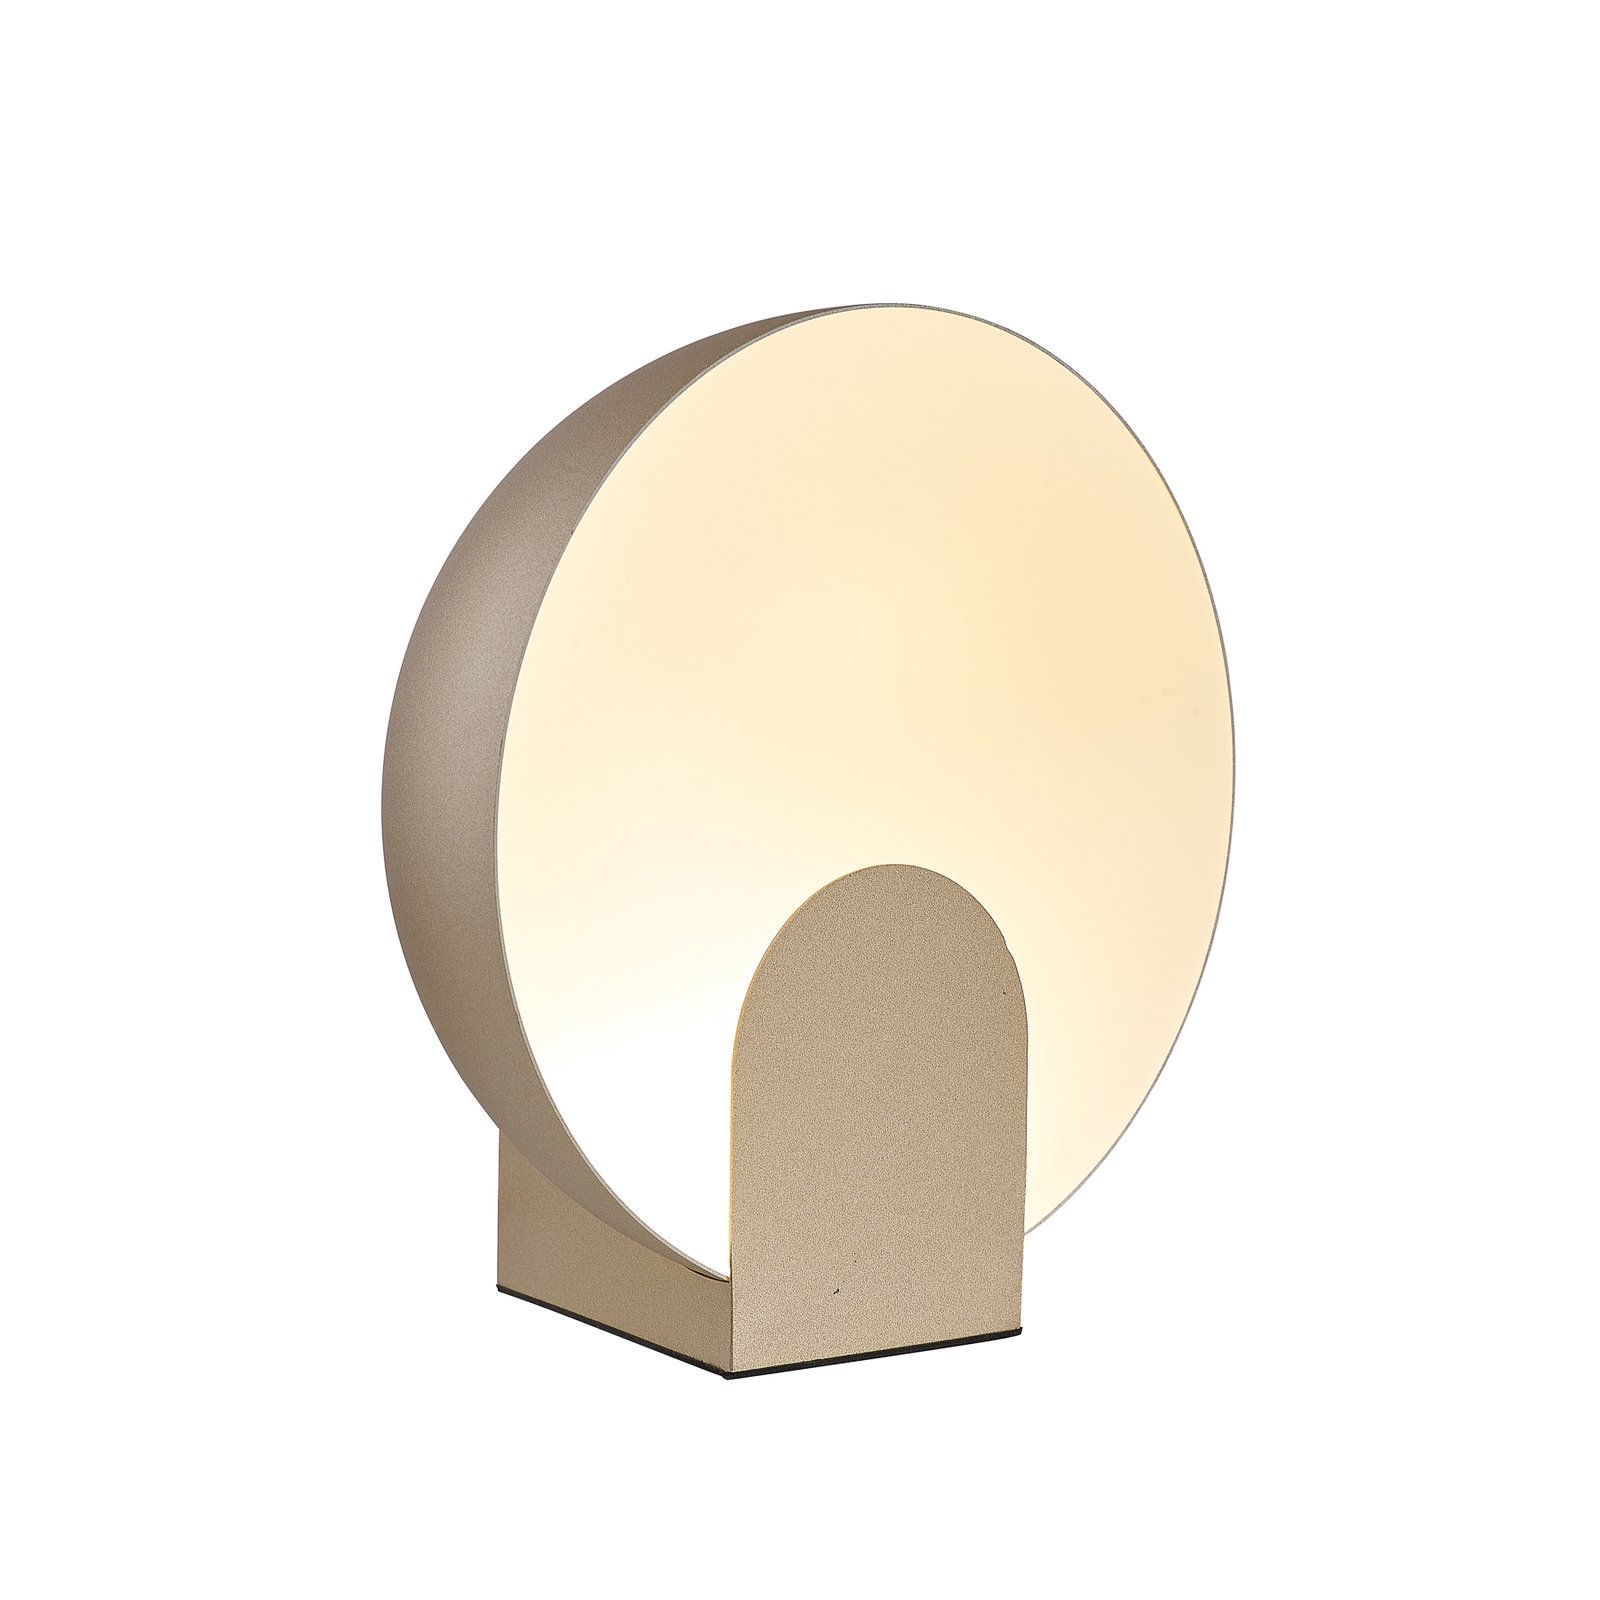 Óculo LED-bordslampa, guldfärgad, Ø 20cm, metall, indirekt